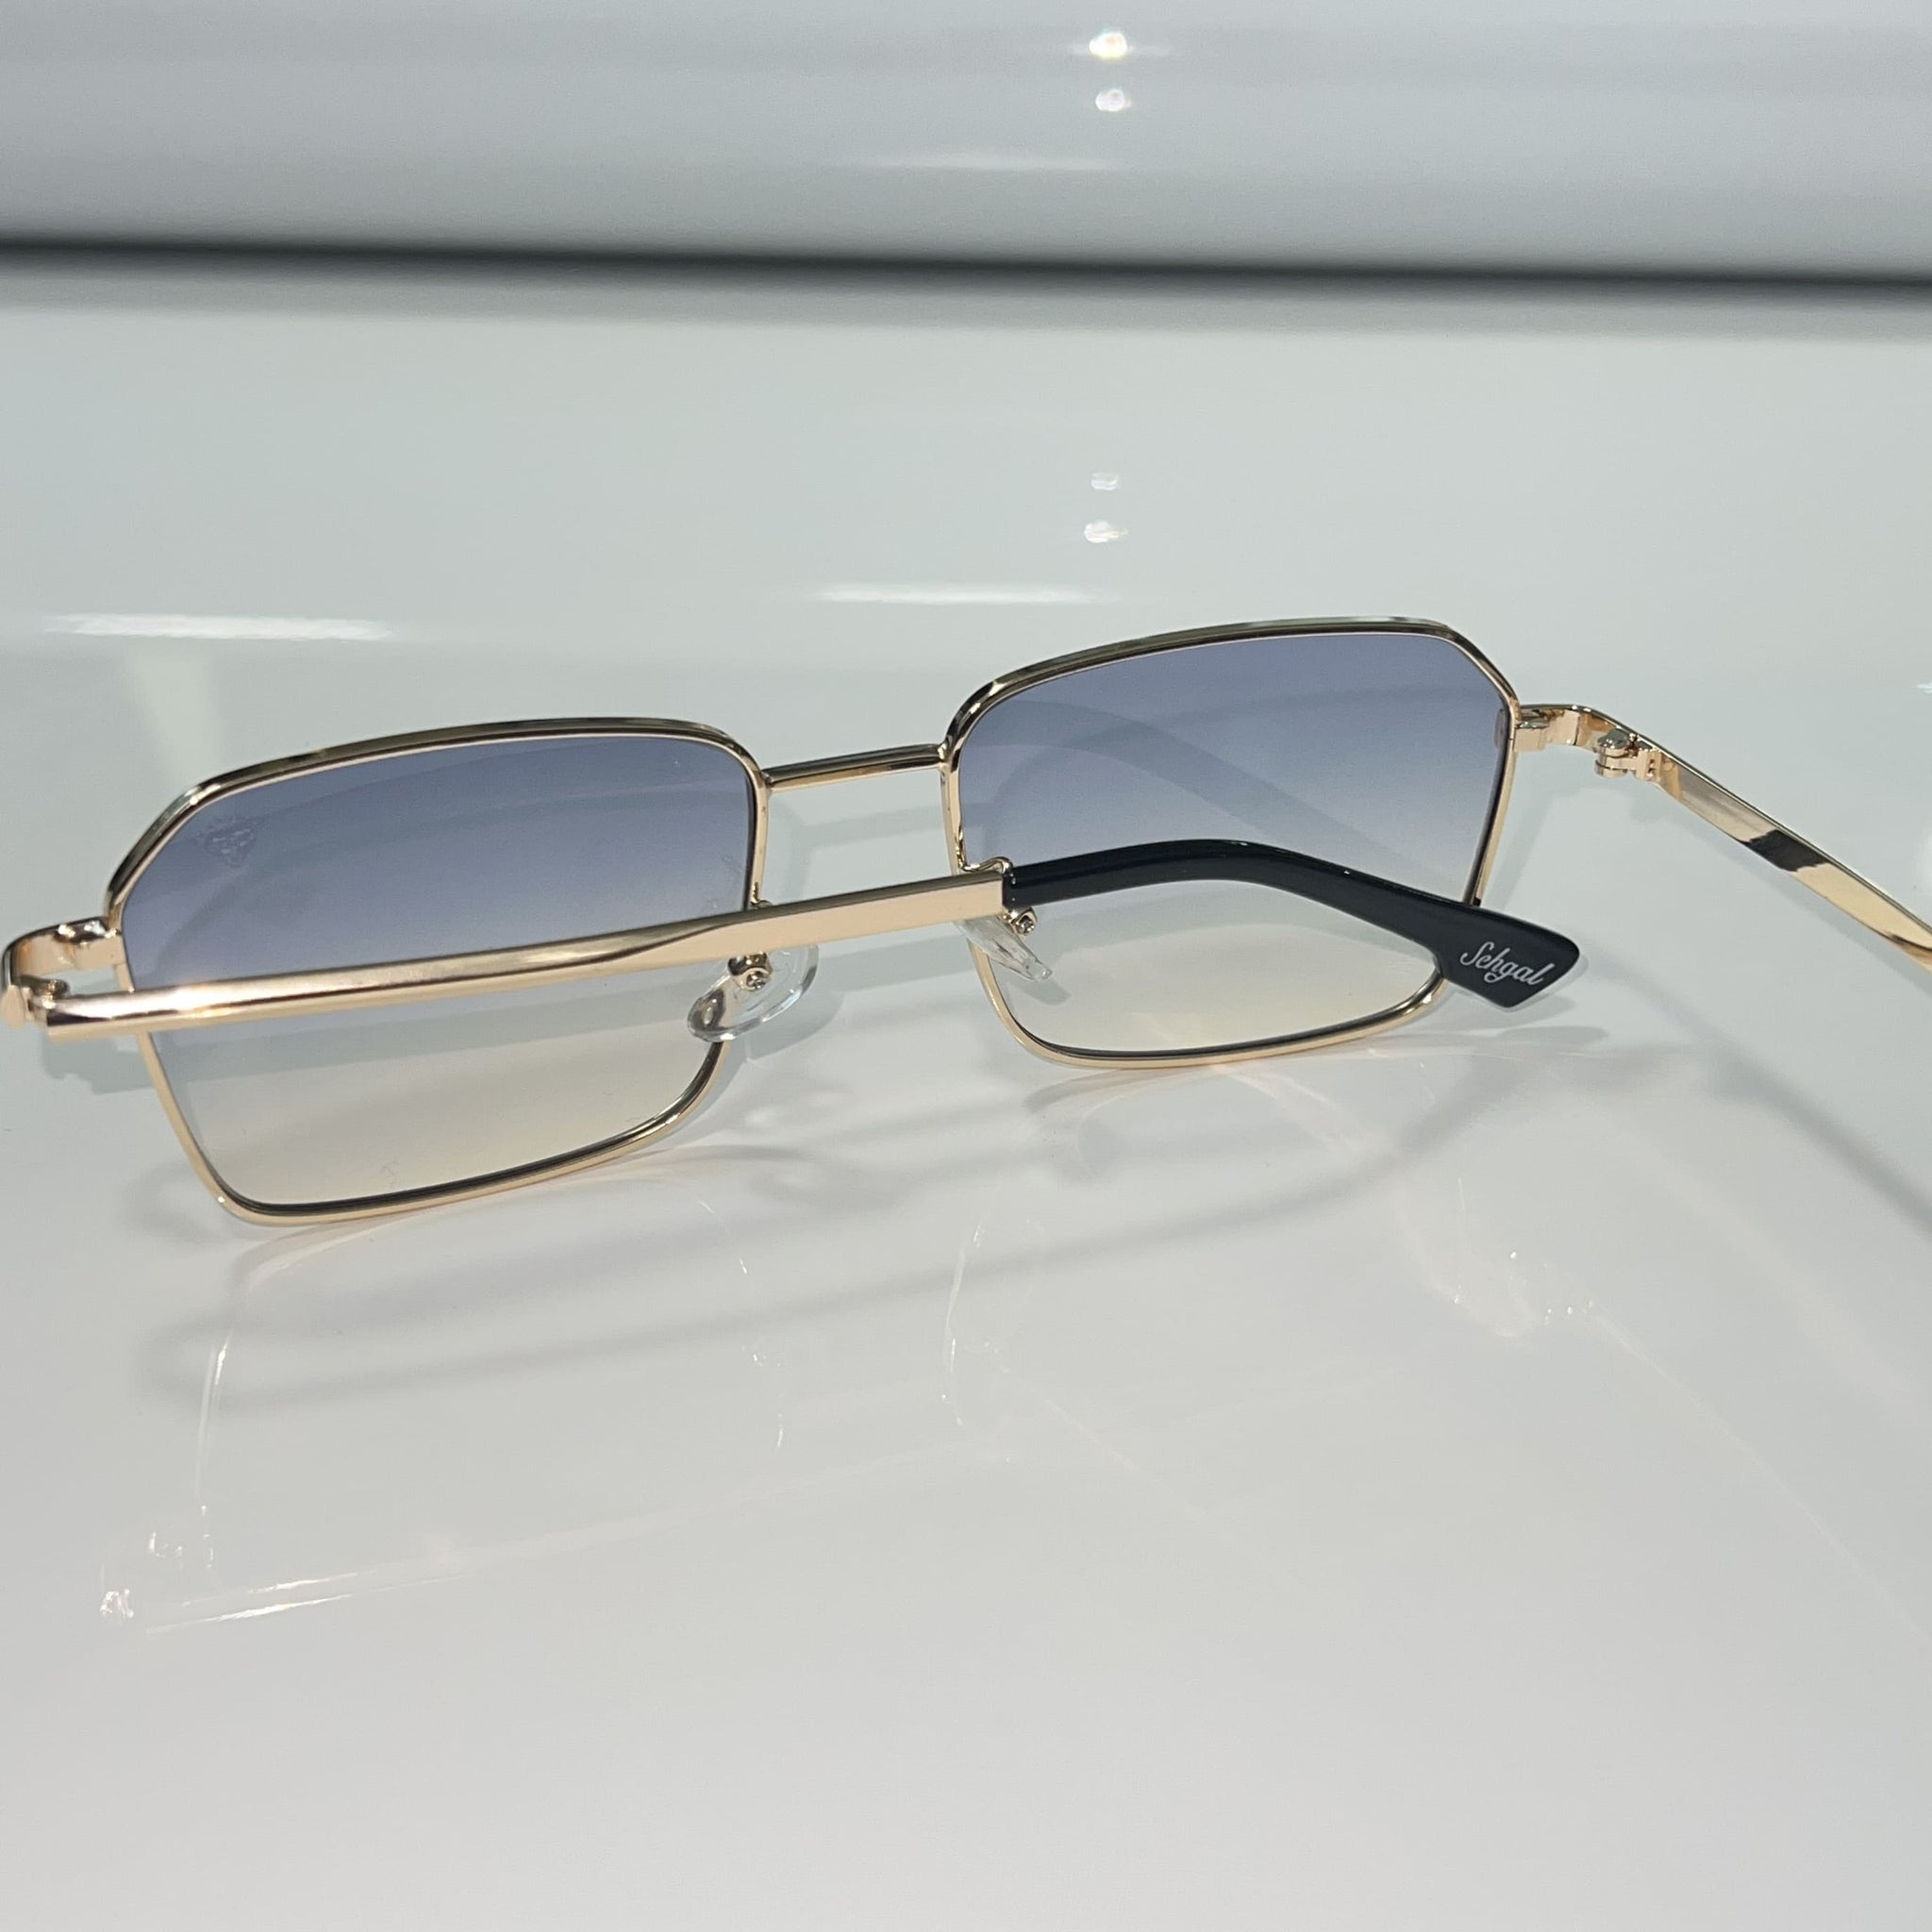 Celebrity Glasses - 14k gold plated - Sehgal Glasses - Blue Shade / Dark to Light